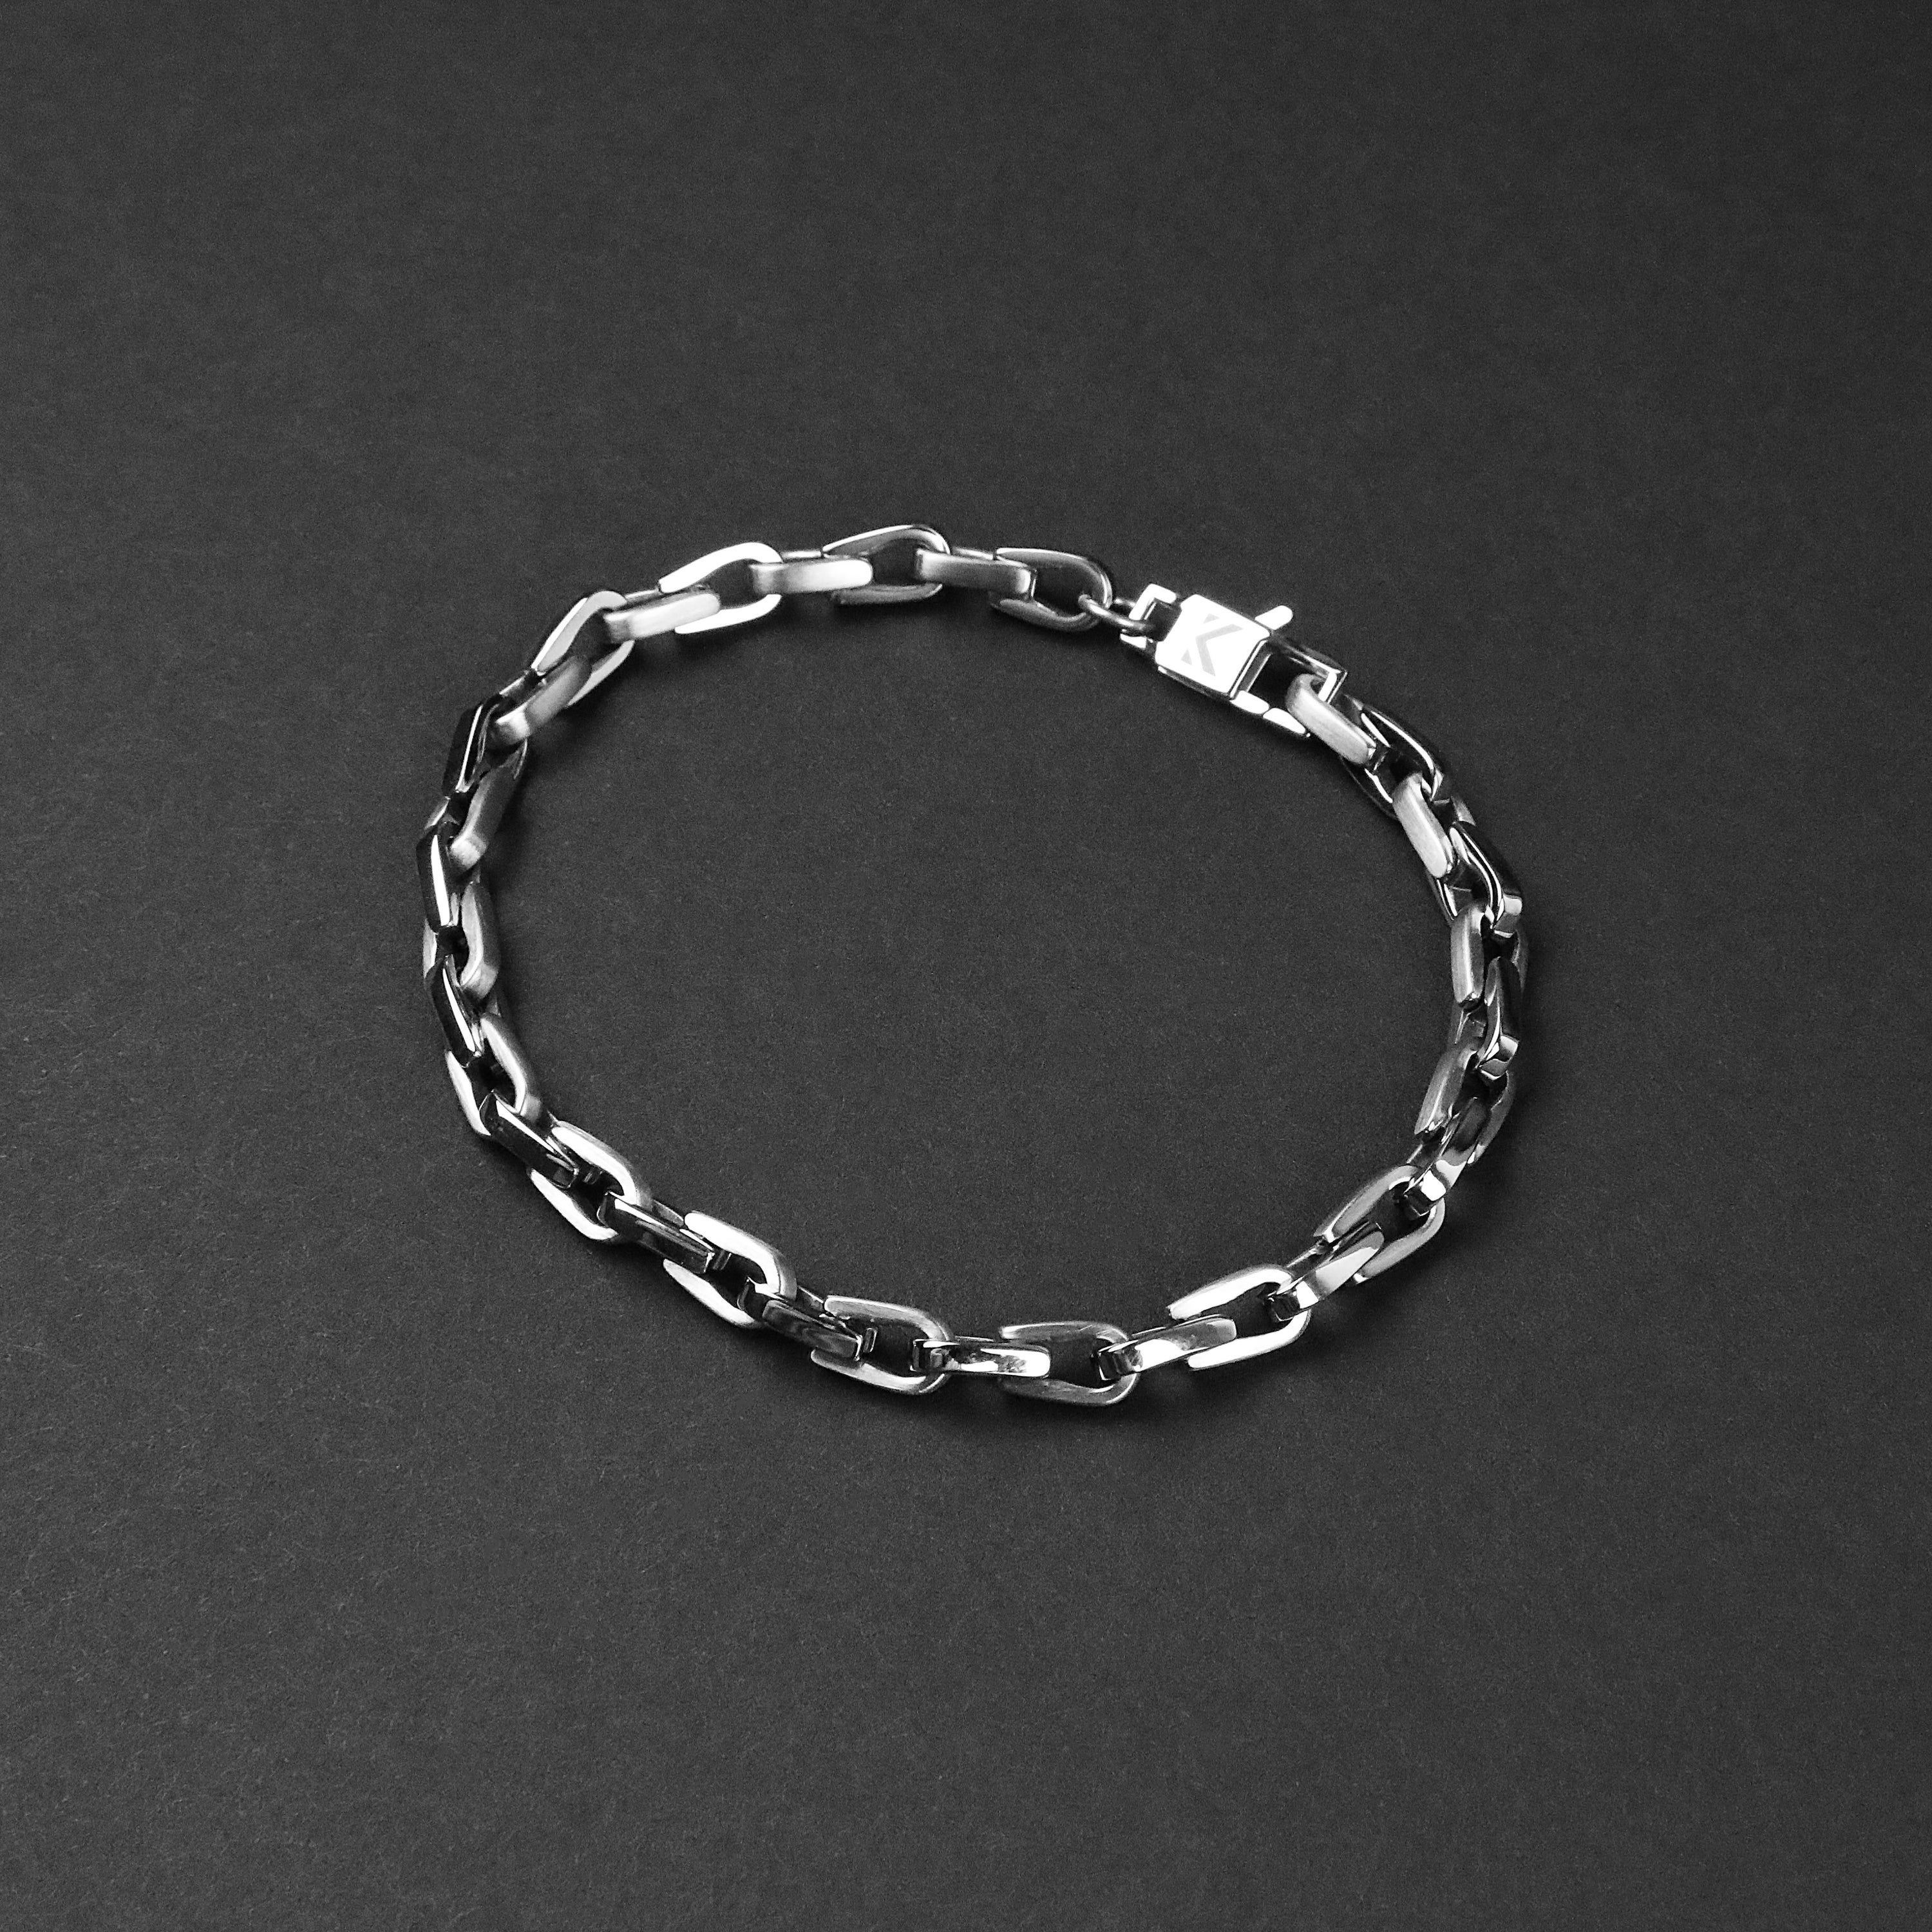 Horseshoe Link Chain Bracelet - Silver 5mm